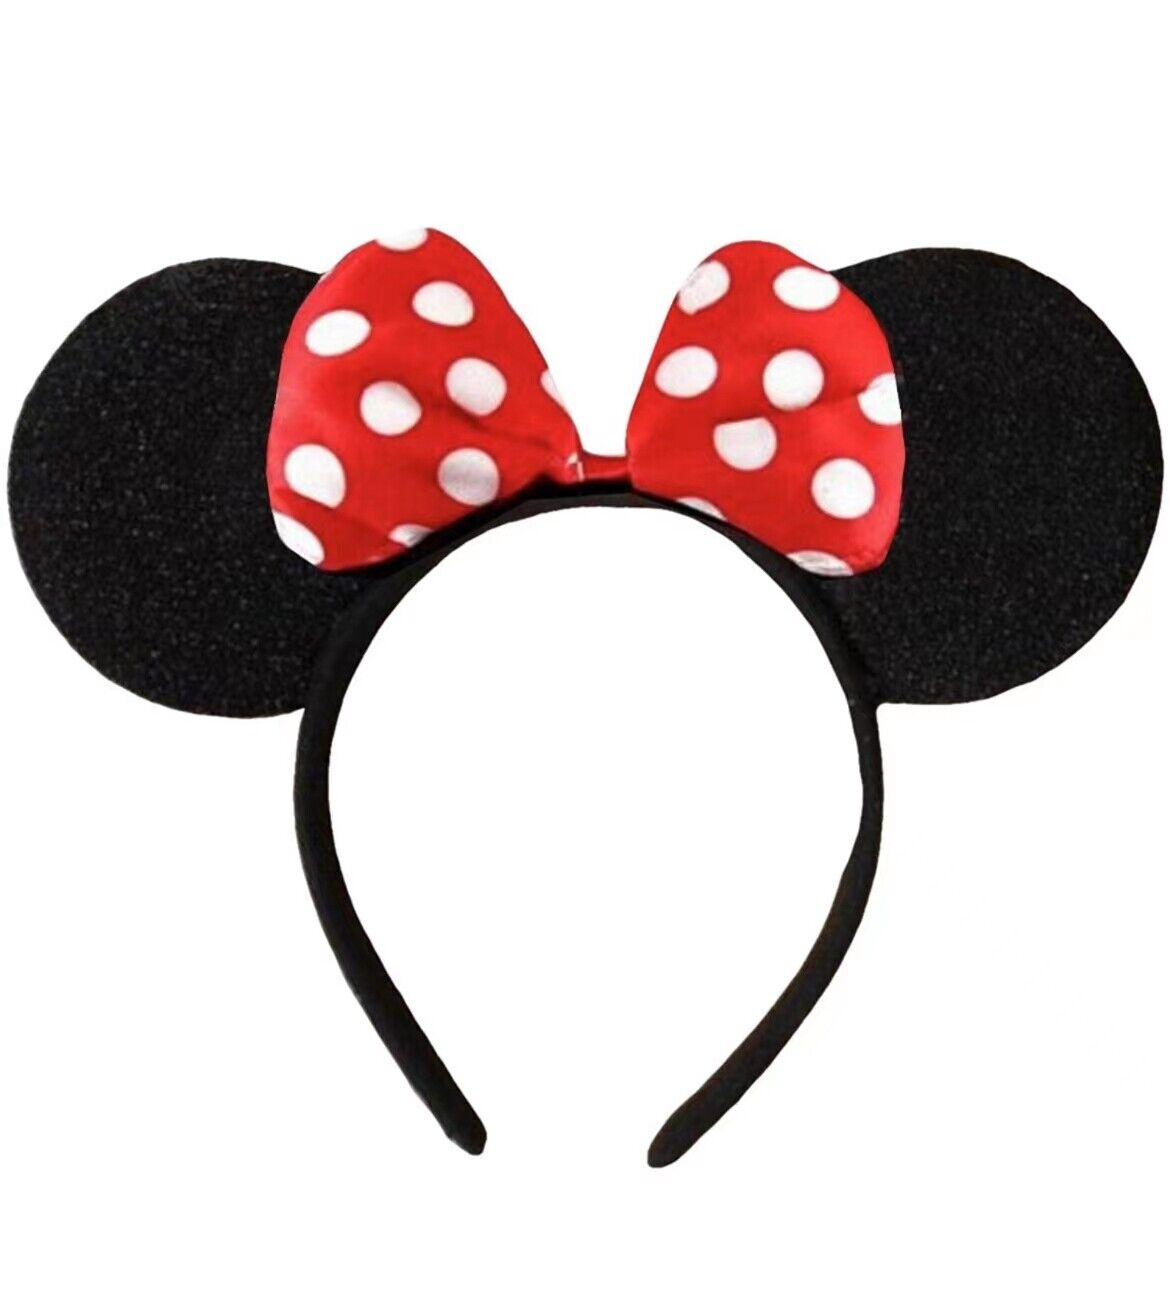 Minnie Mouse Ears -  Red polka dot Bow Minnie Ears  / Disney Party / Disney Ears